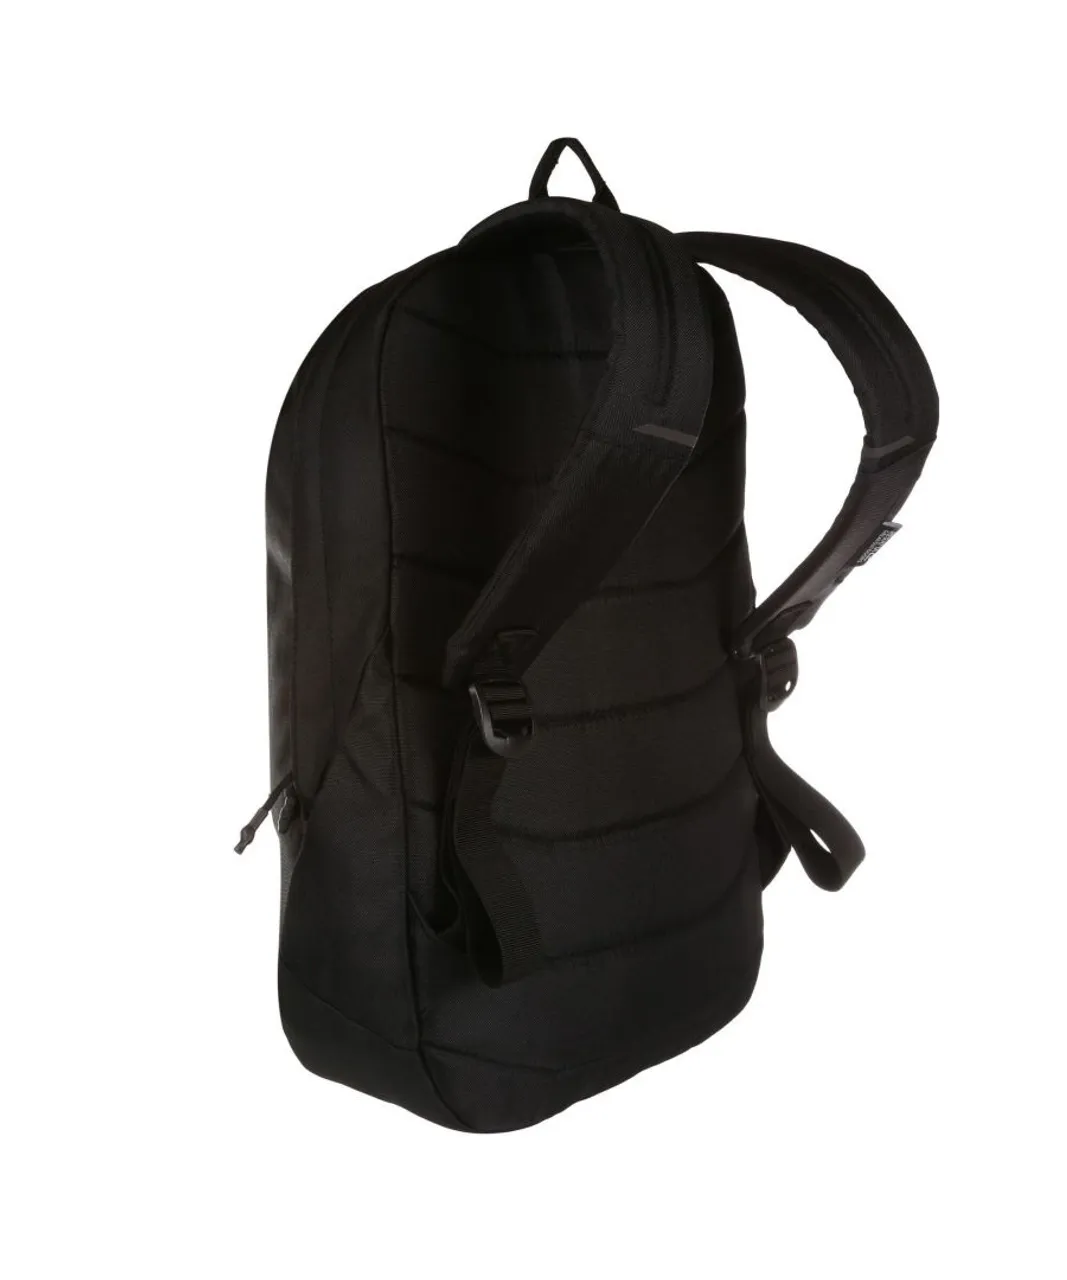 Regatta Unisex Backpack (Black) - One Size